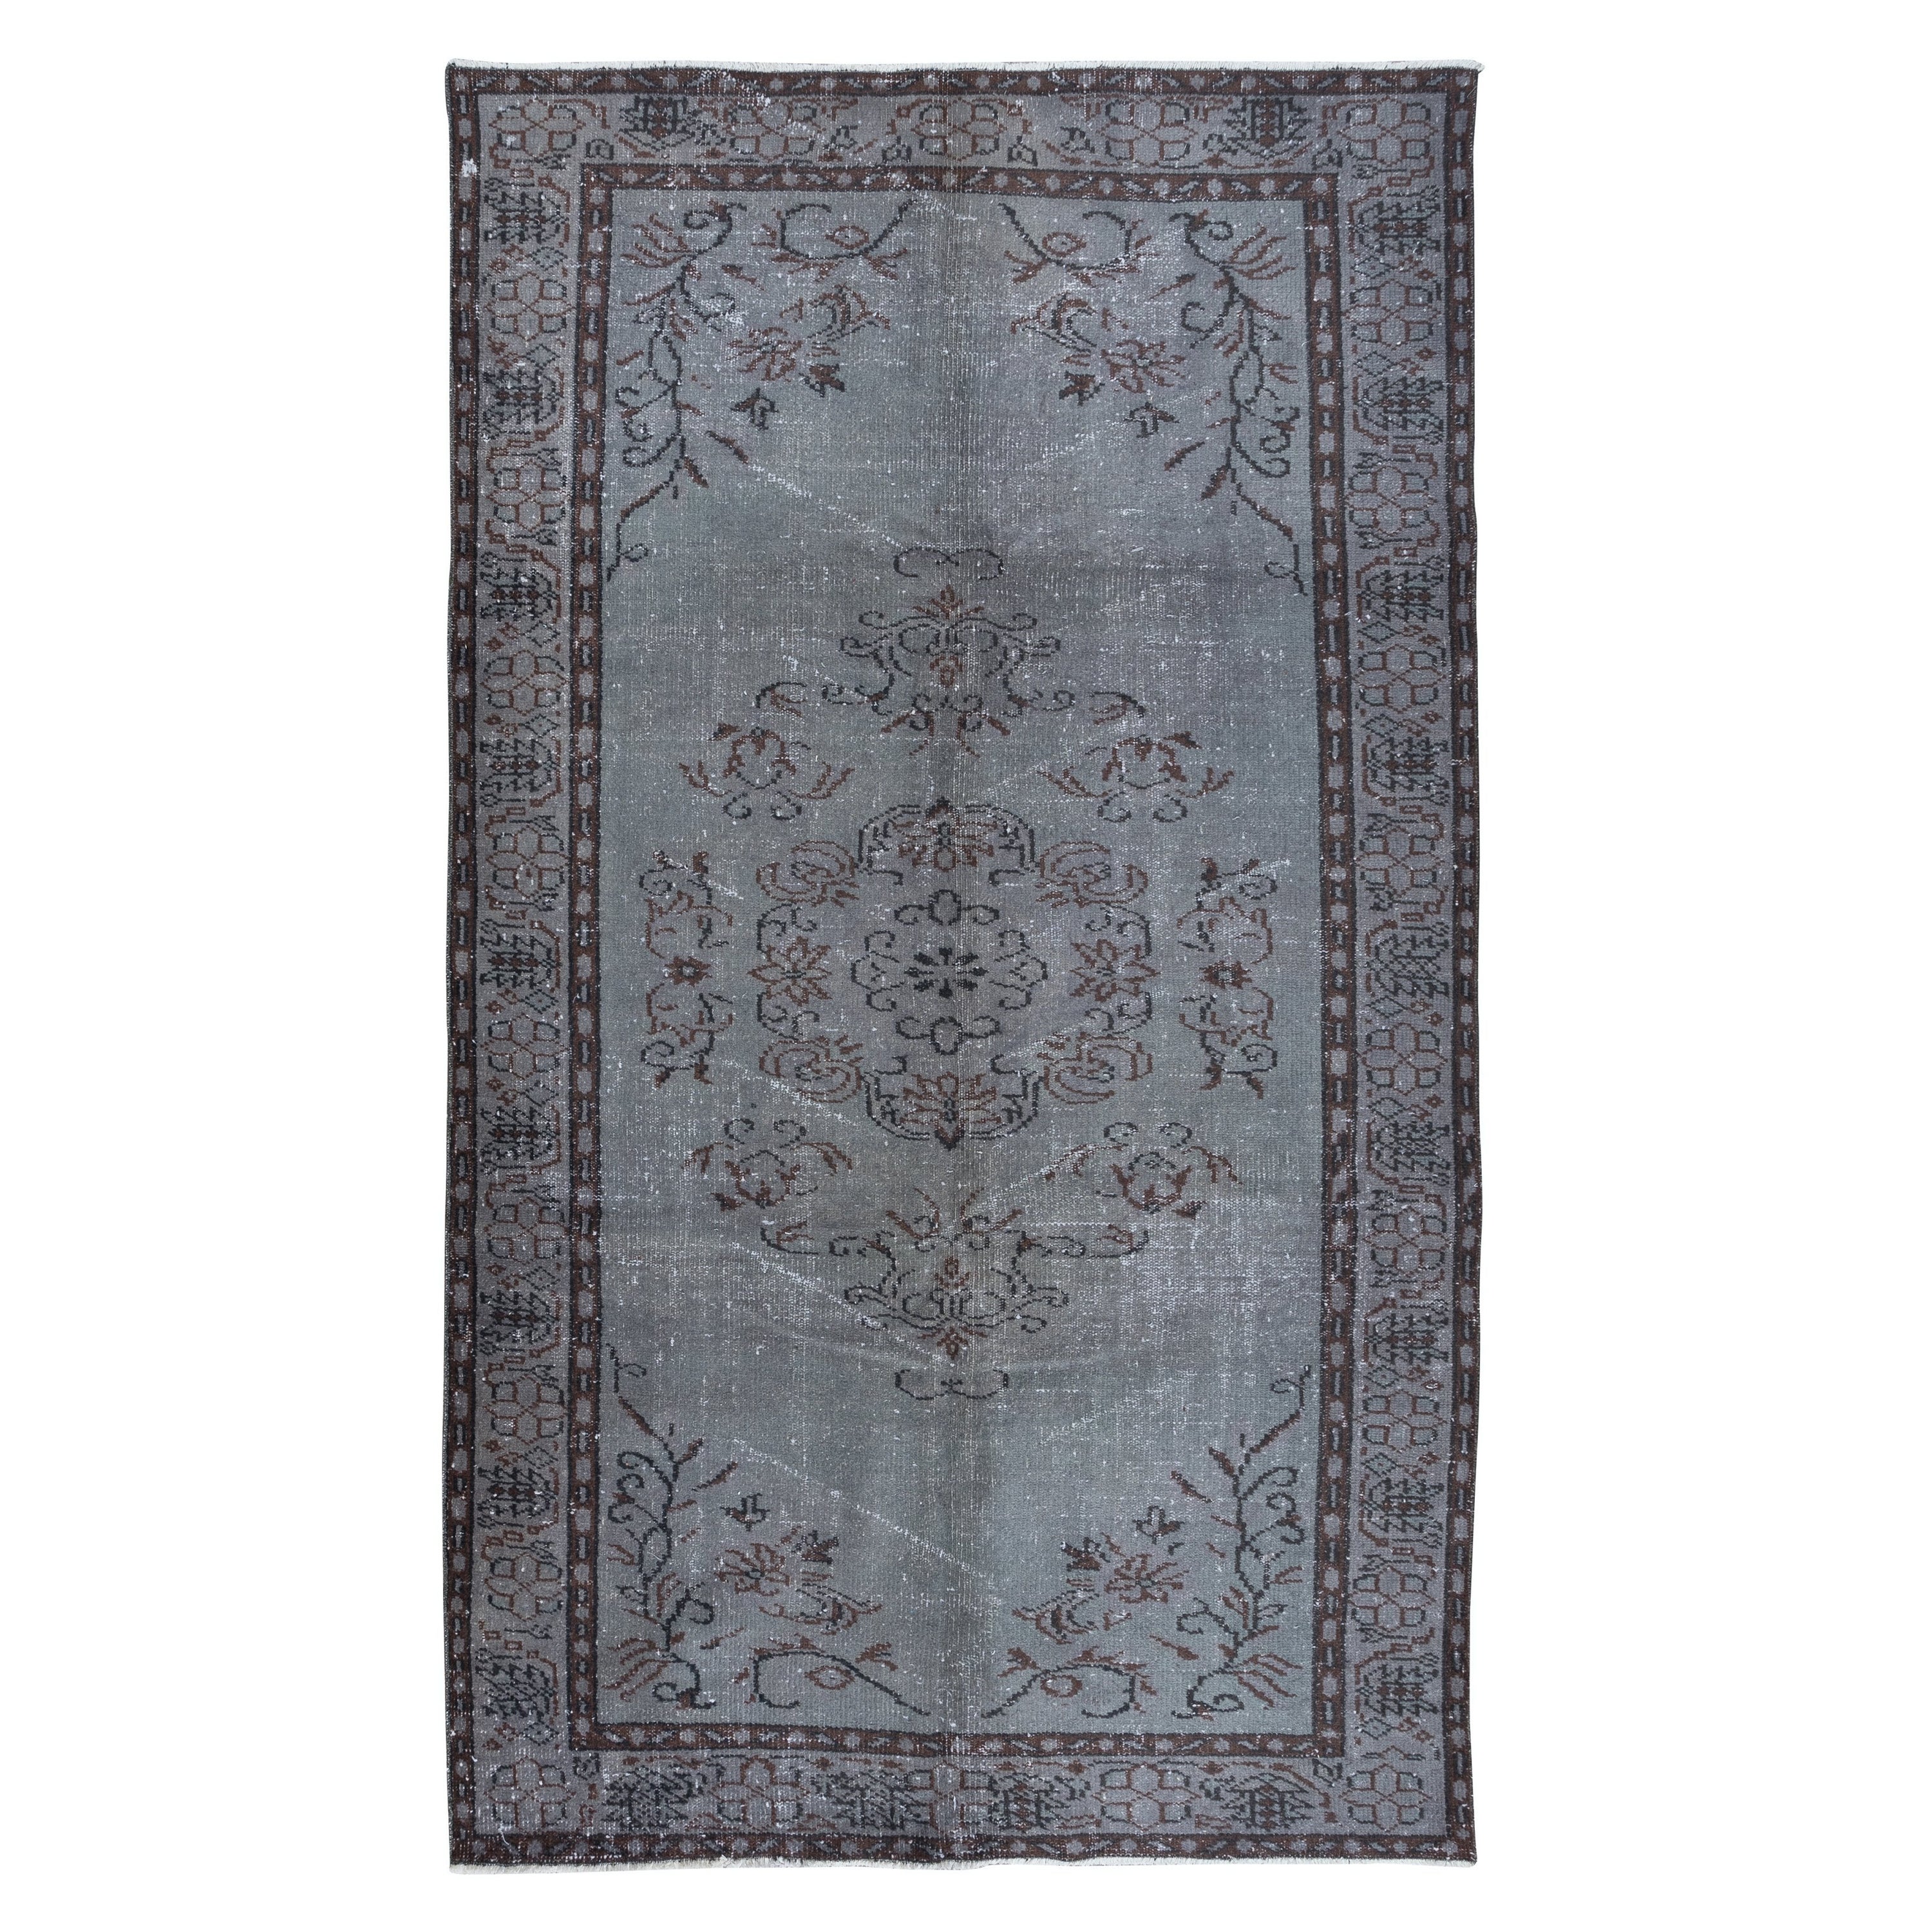 5.6x9.4 Ft Modern Gray Handmade Area Rug, Turkish Carpet with Medallion Design For Sale